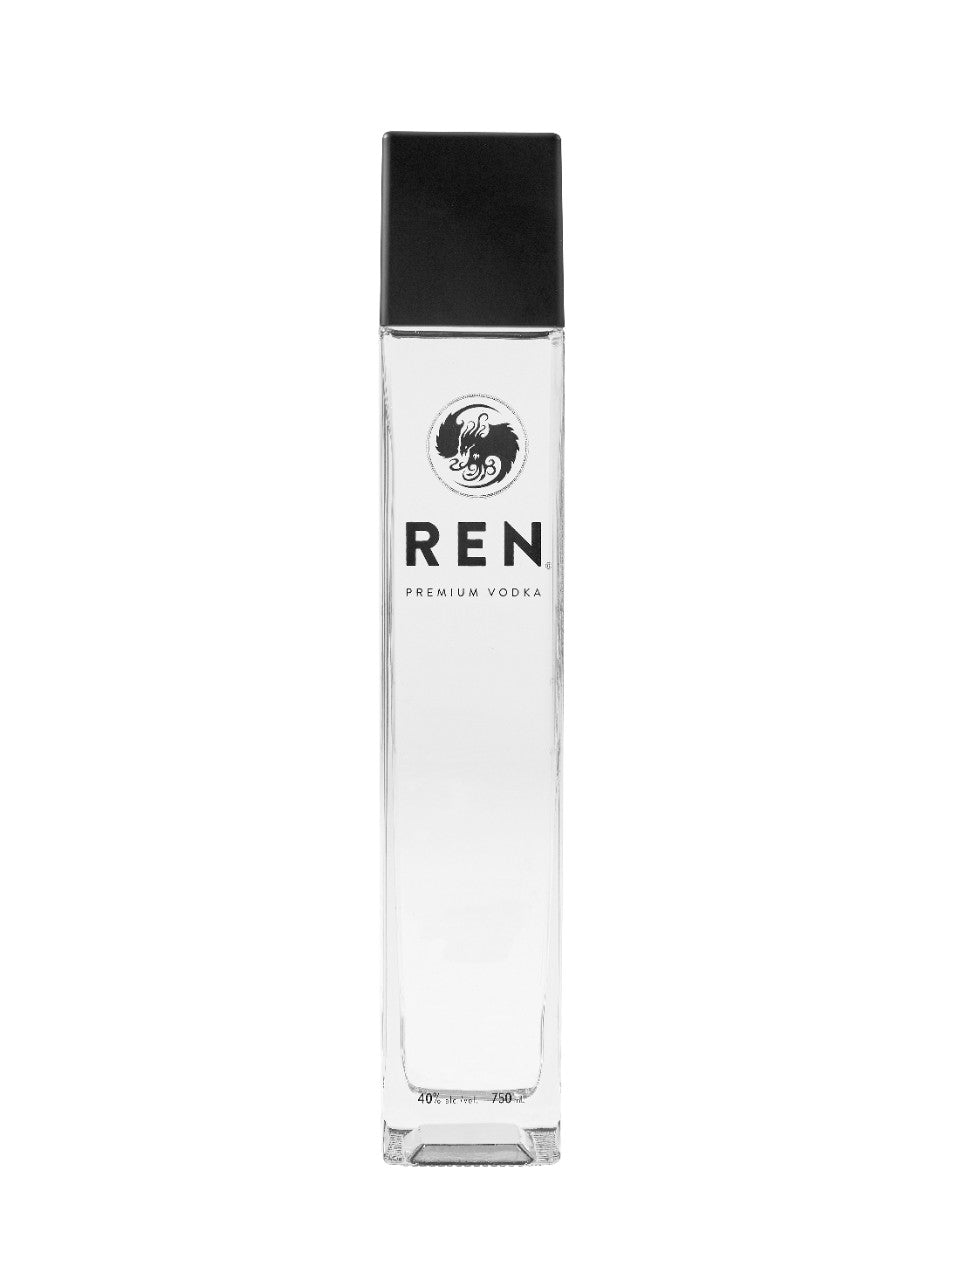 Ren Ultra Premium Vodka 750 mL bottle